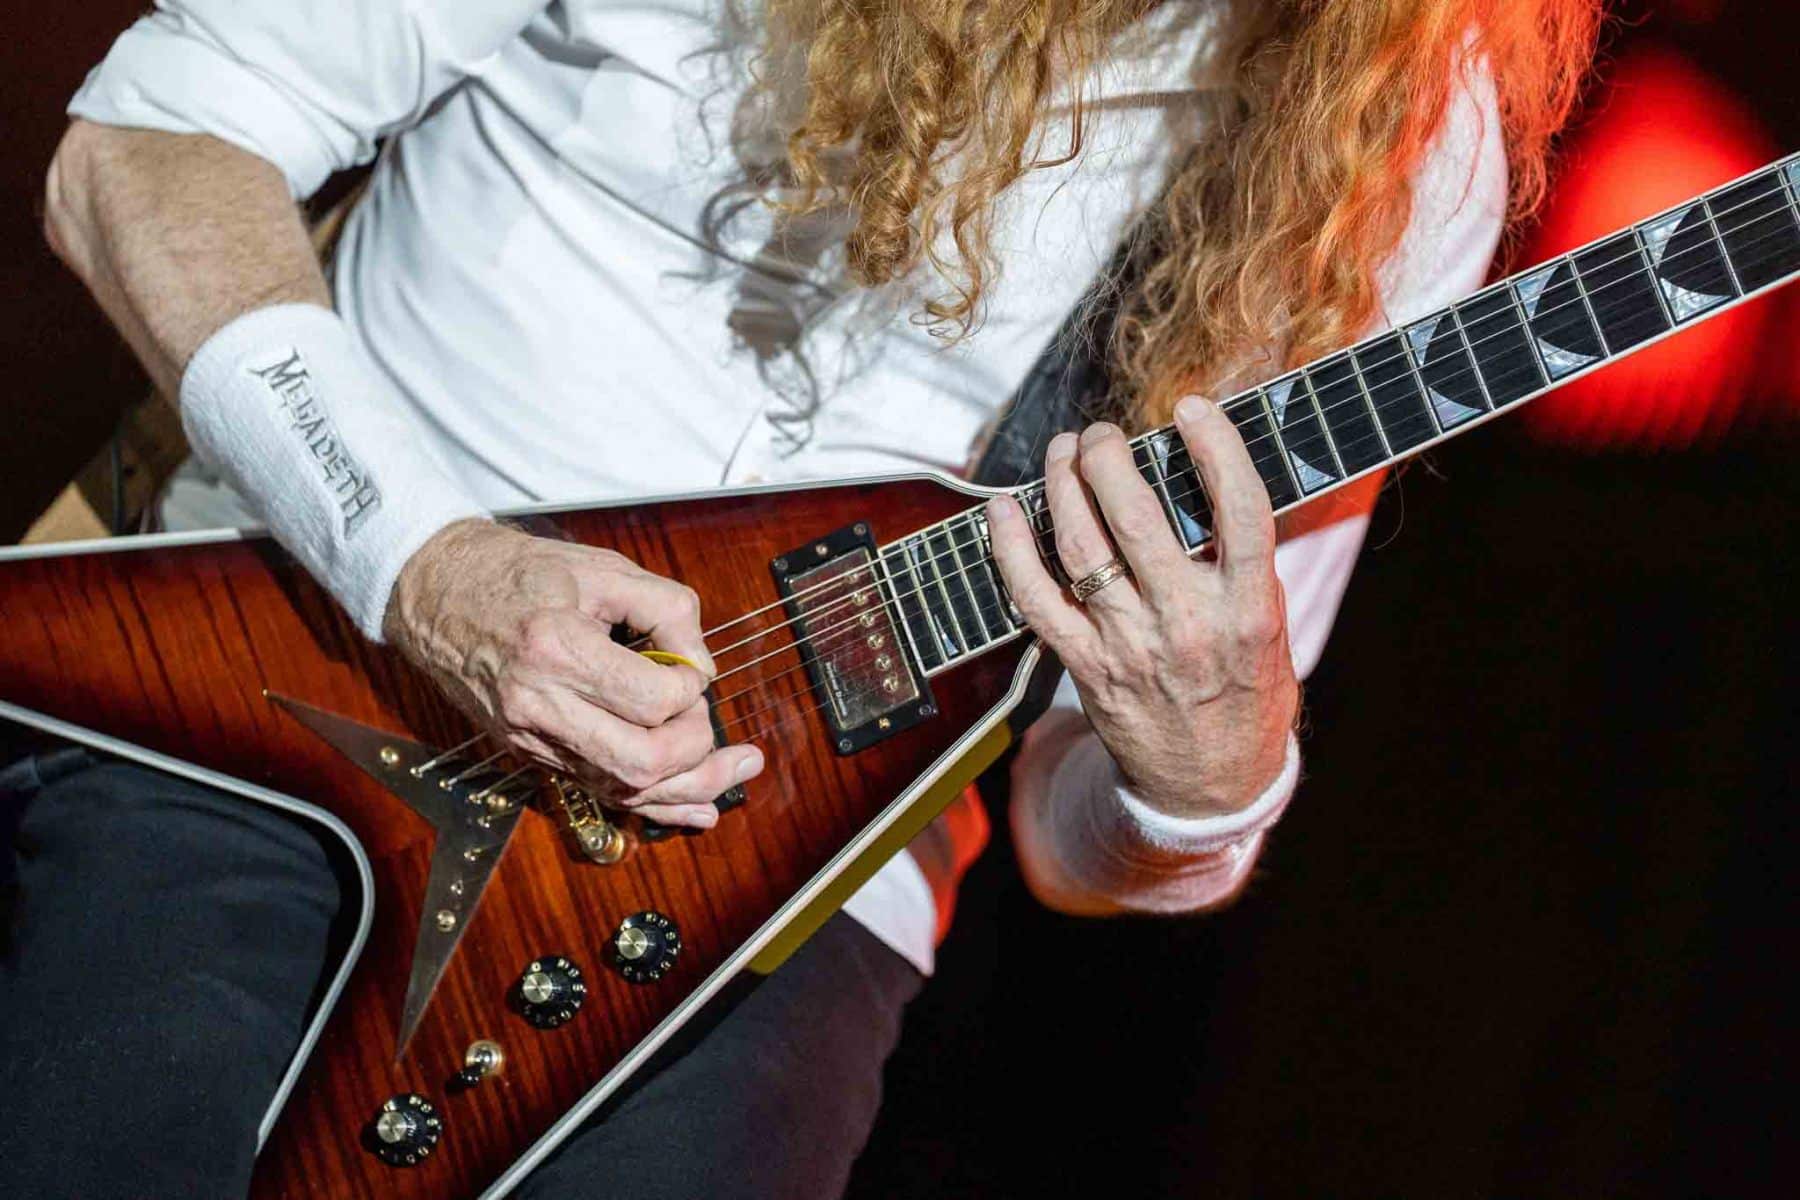 Megadeth-14